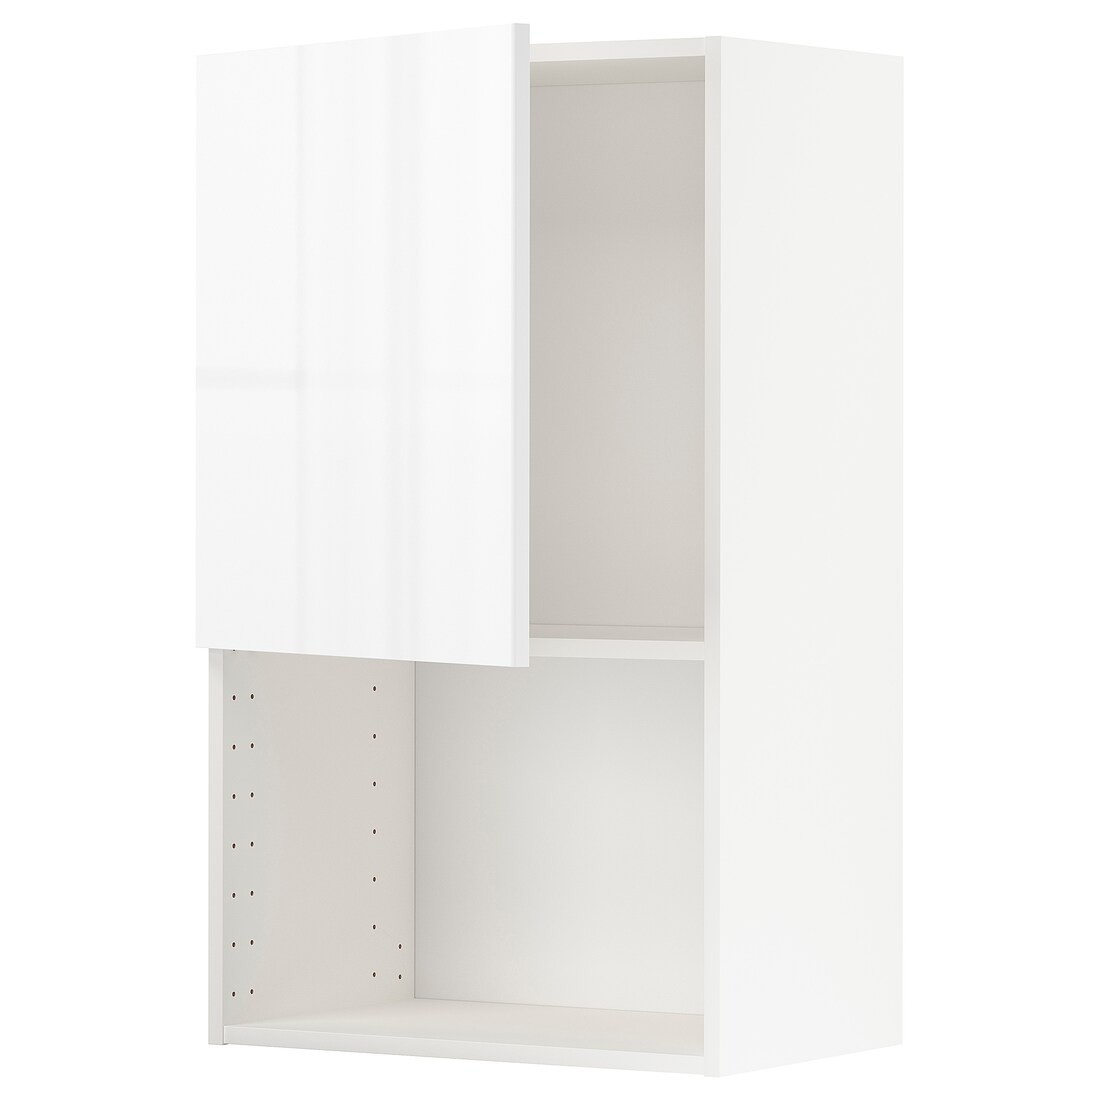 IKEA METOD МЕТОД Навесной шкаф для СВЧ-печи, белый / Ringhult белый, 60x100 см 69455700 | 694.557.00